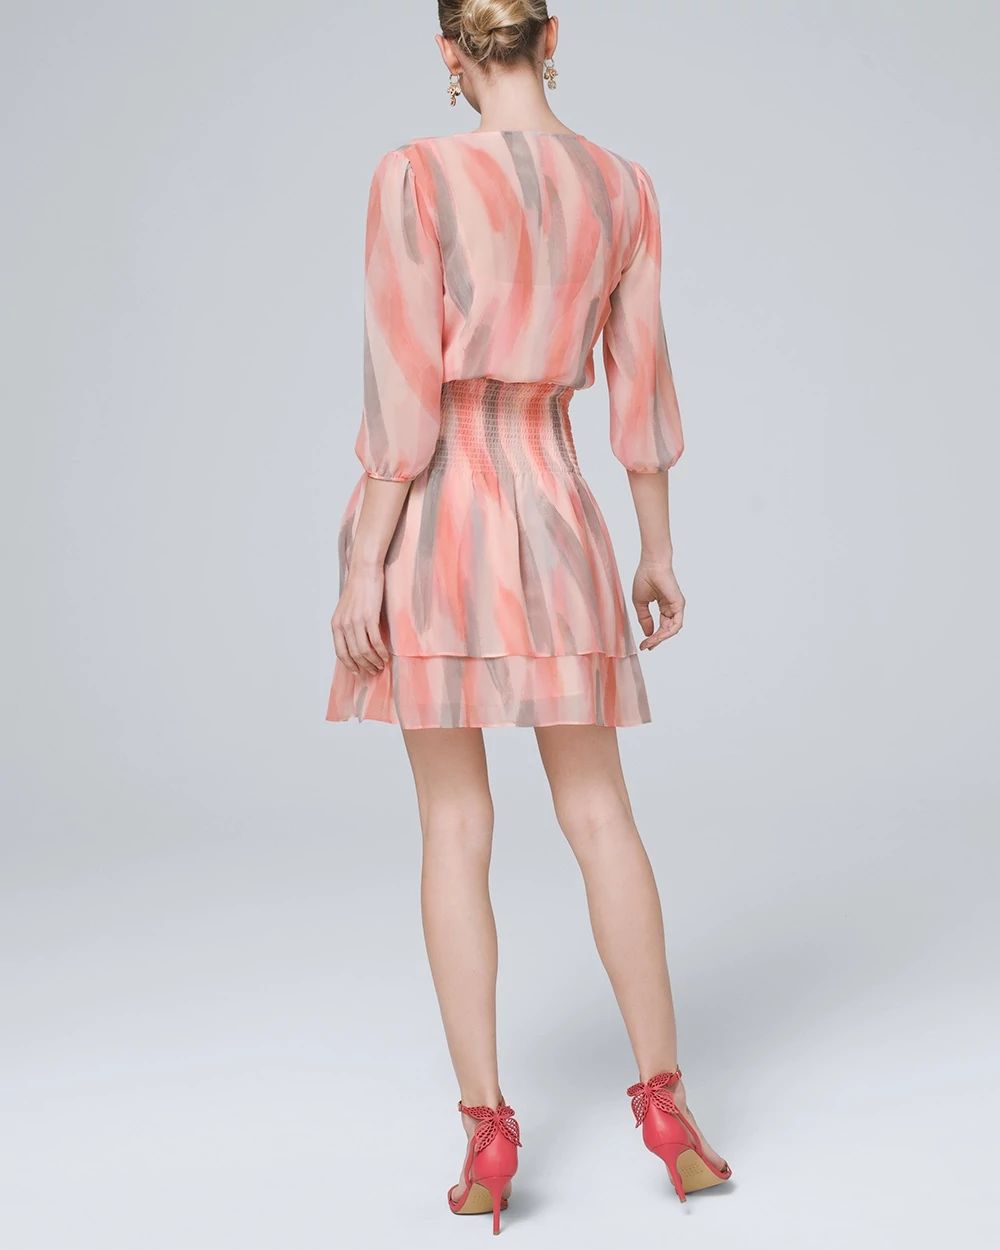 Petite Striped Soft Flounce Blouson Dress click to view larger image.